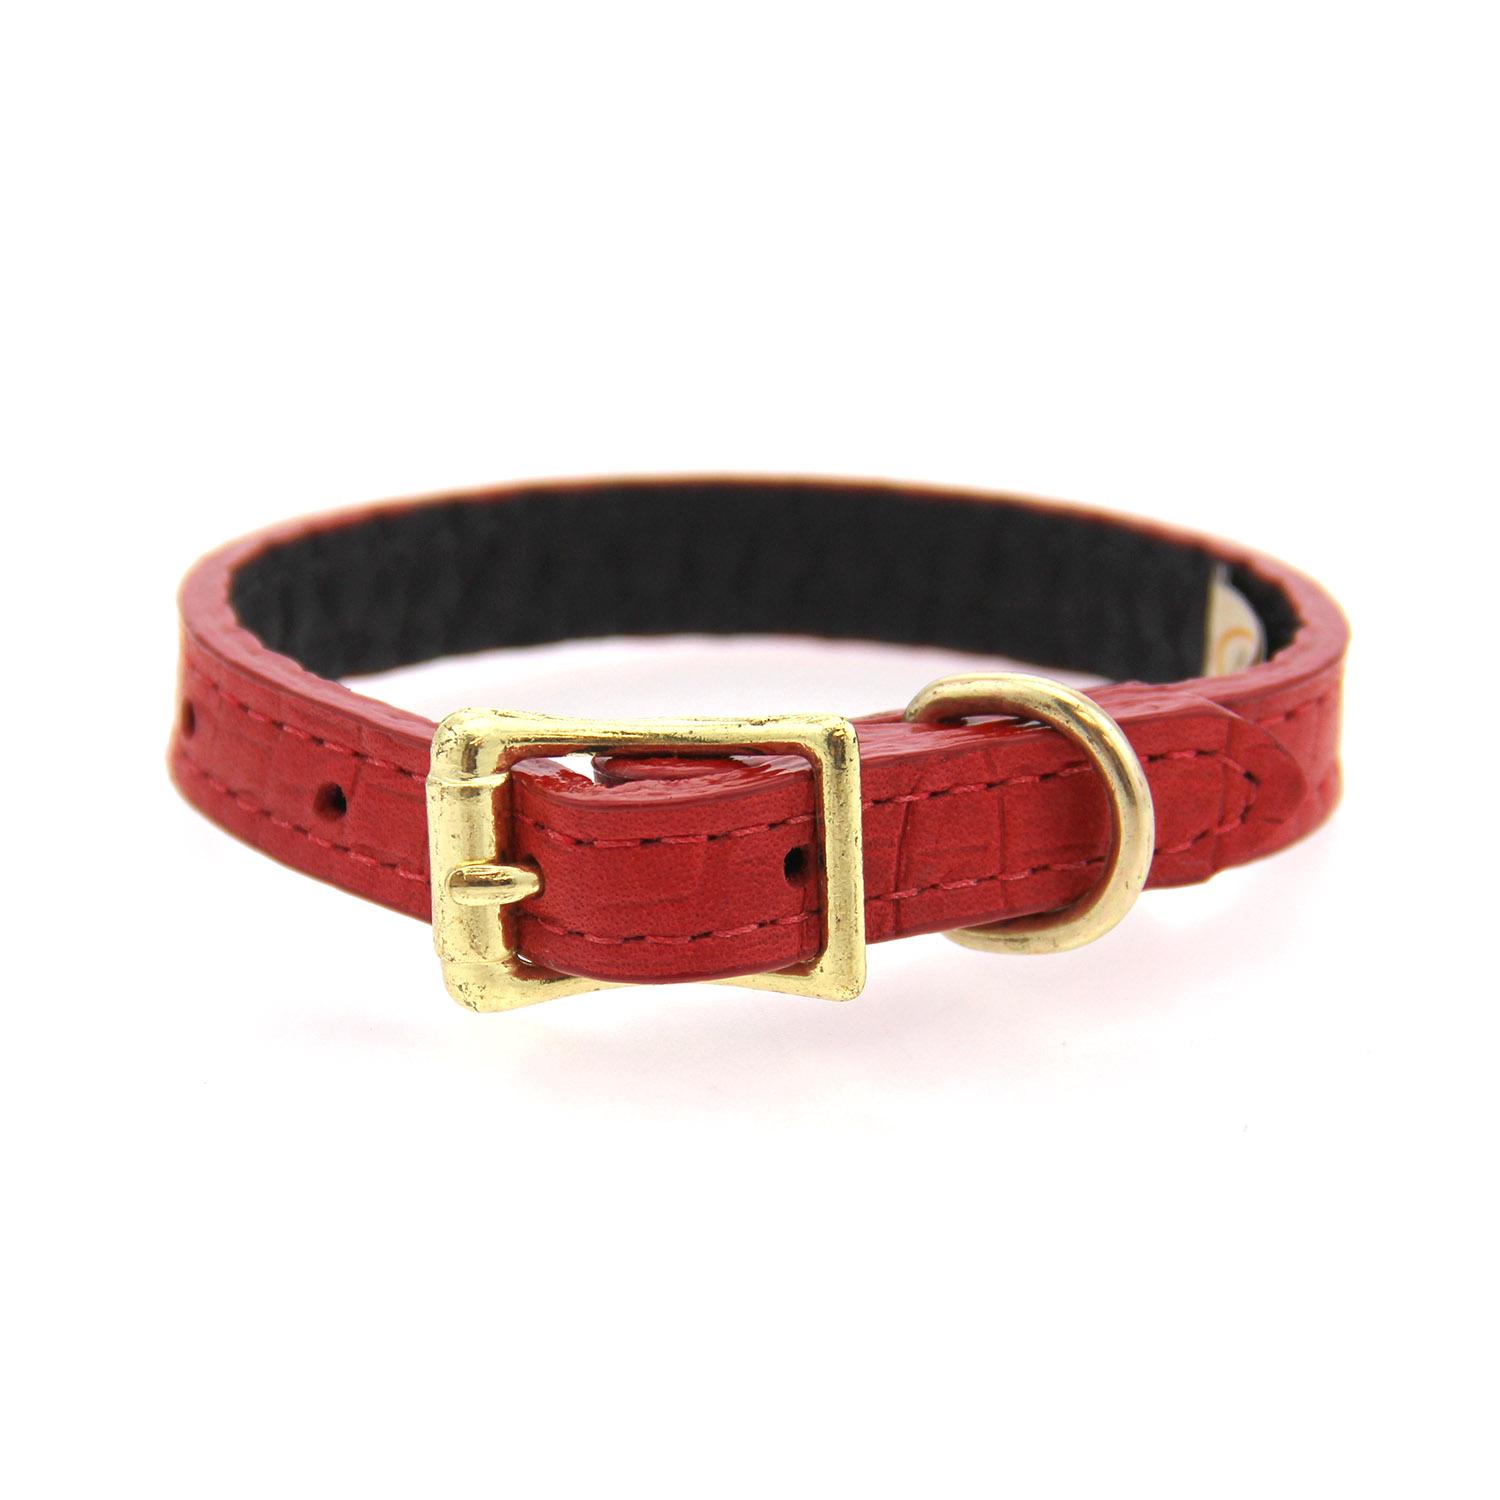 Savannah Leather Dog Collar by Auburn Leather - Lizard Red